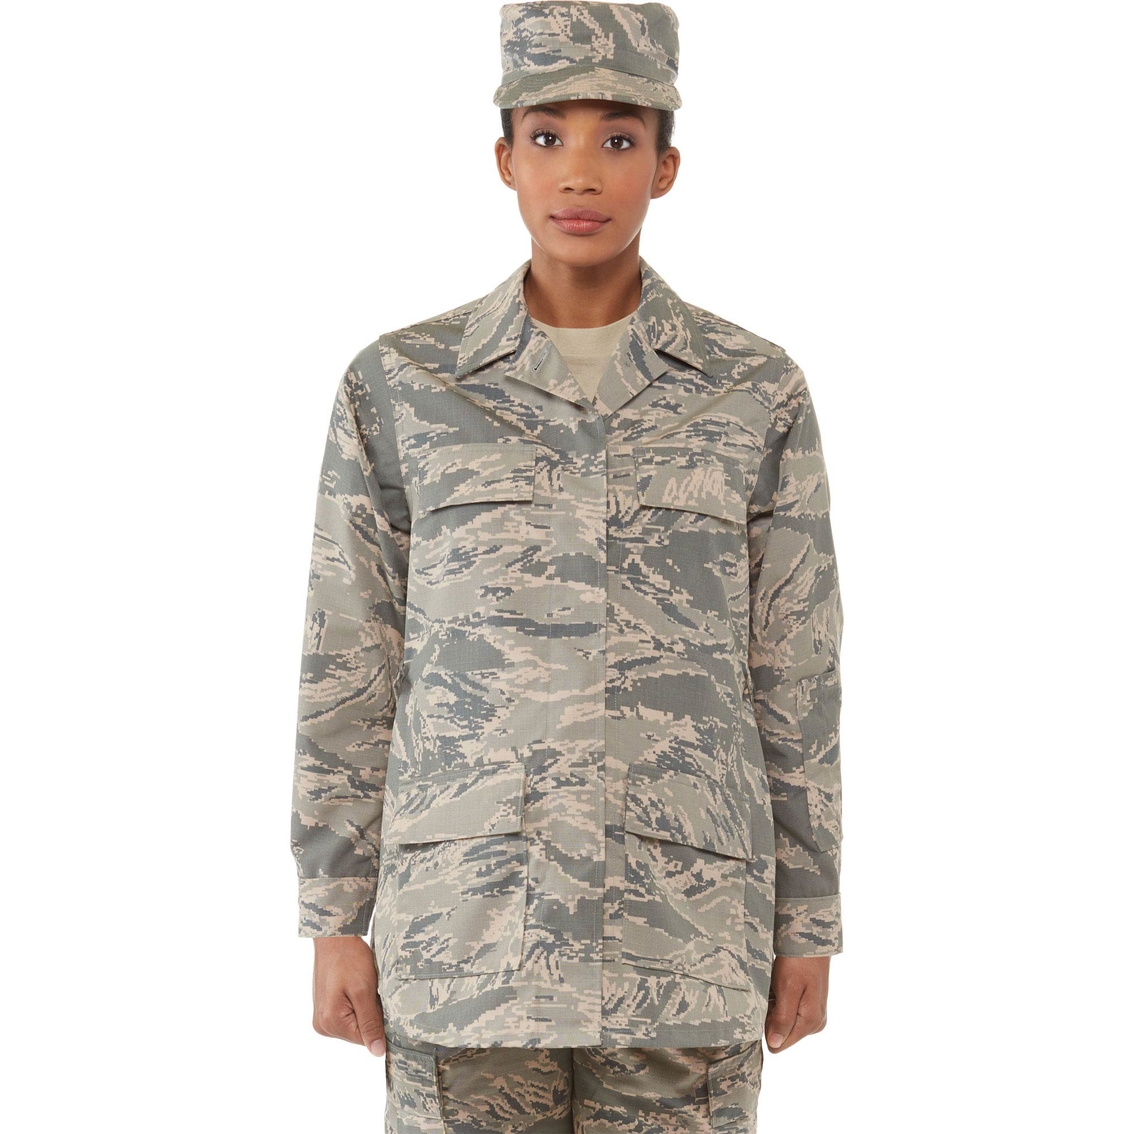 USAF Air Force ABU Tiger Stripe Camouflage Utility Uniform Top A1C E3 ...